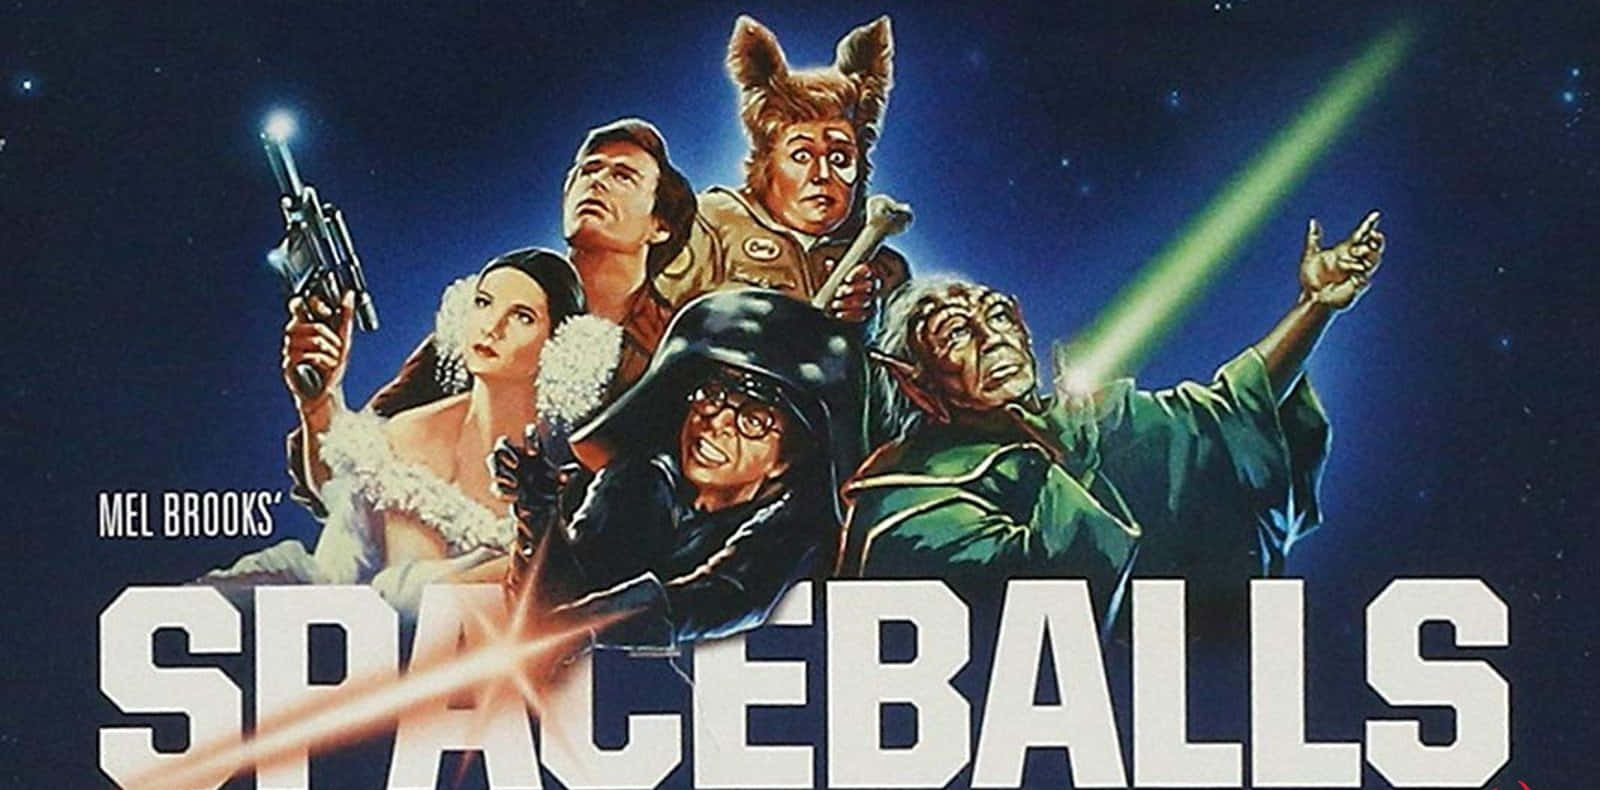 Spaceballs Cast In Iconic Scene Background